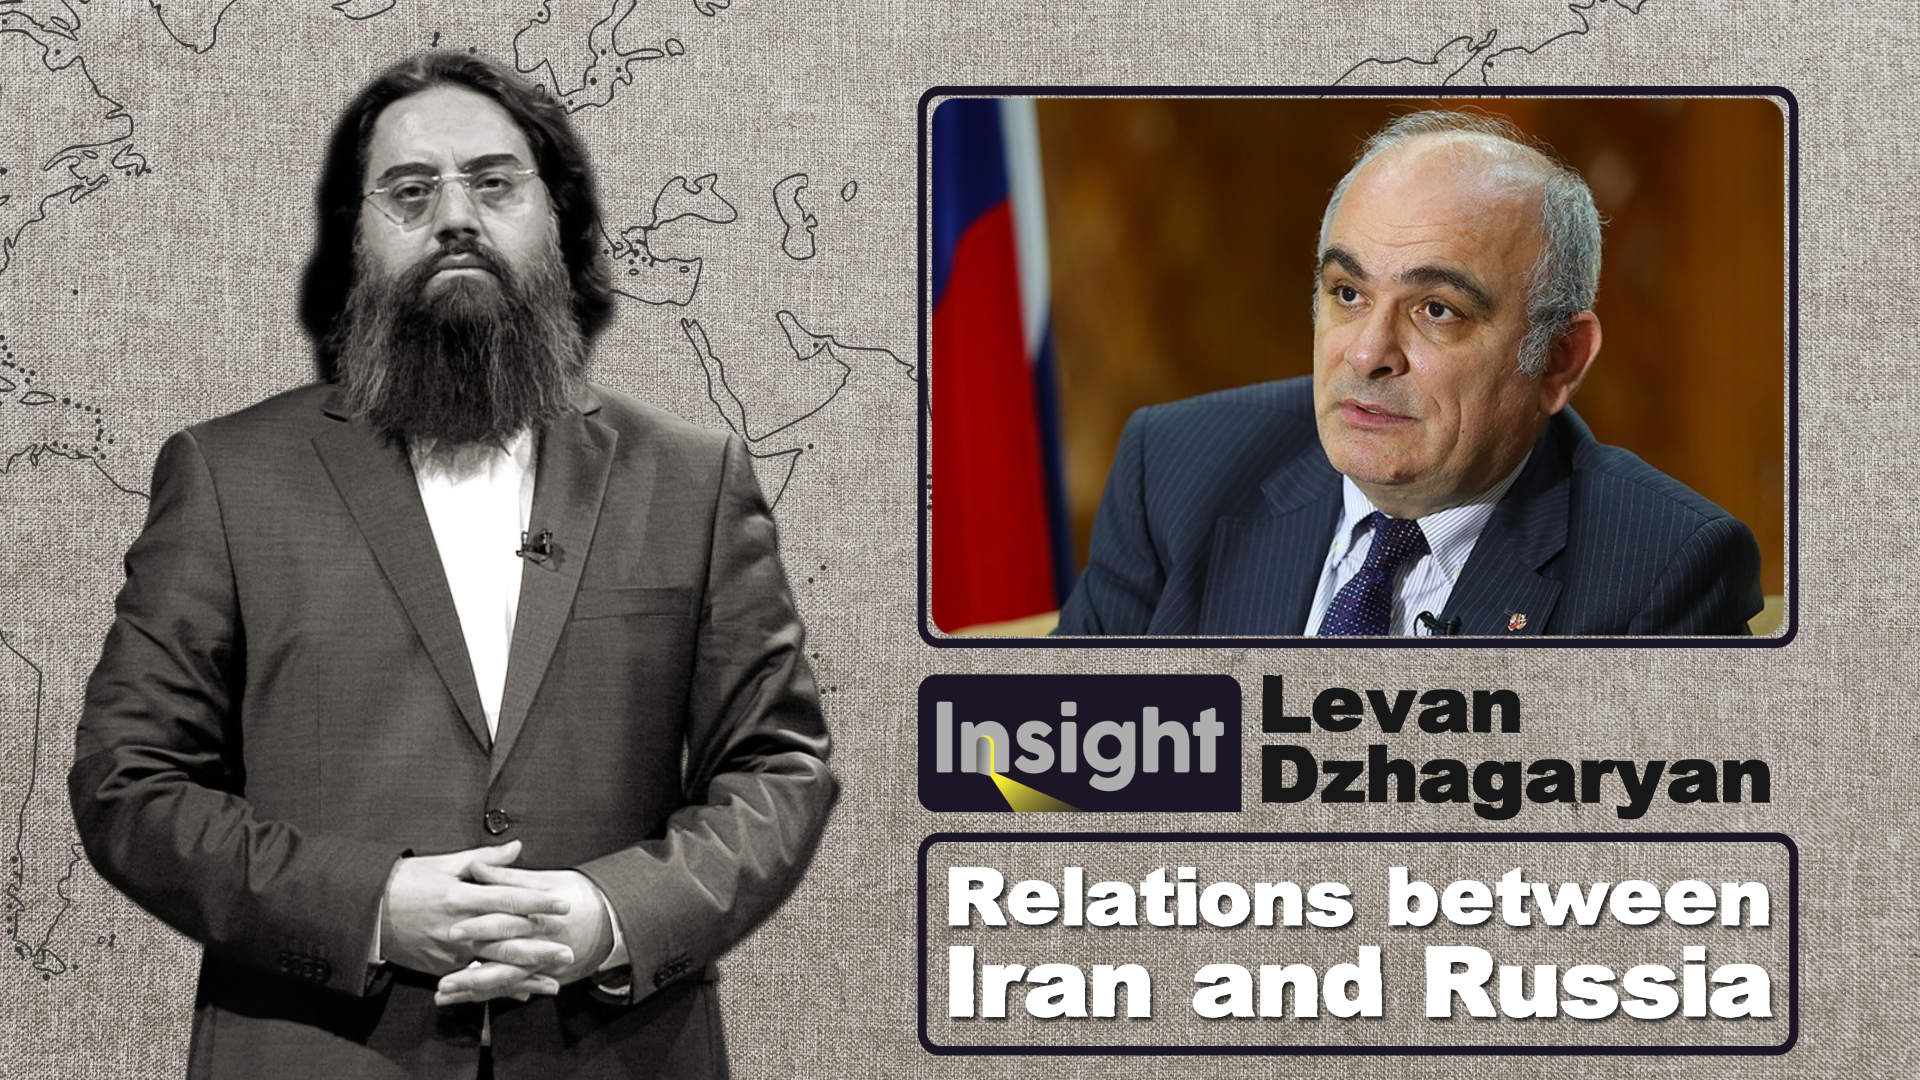 Iran and Russia